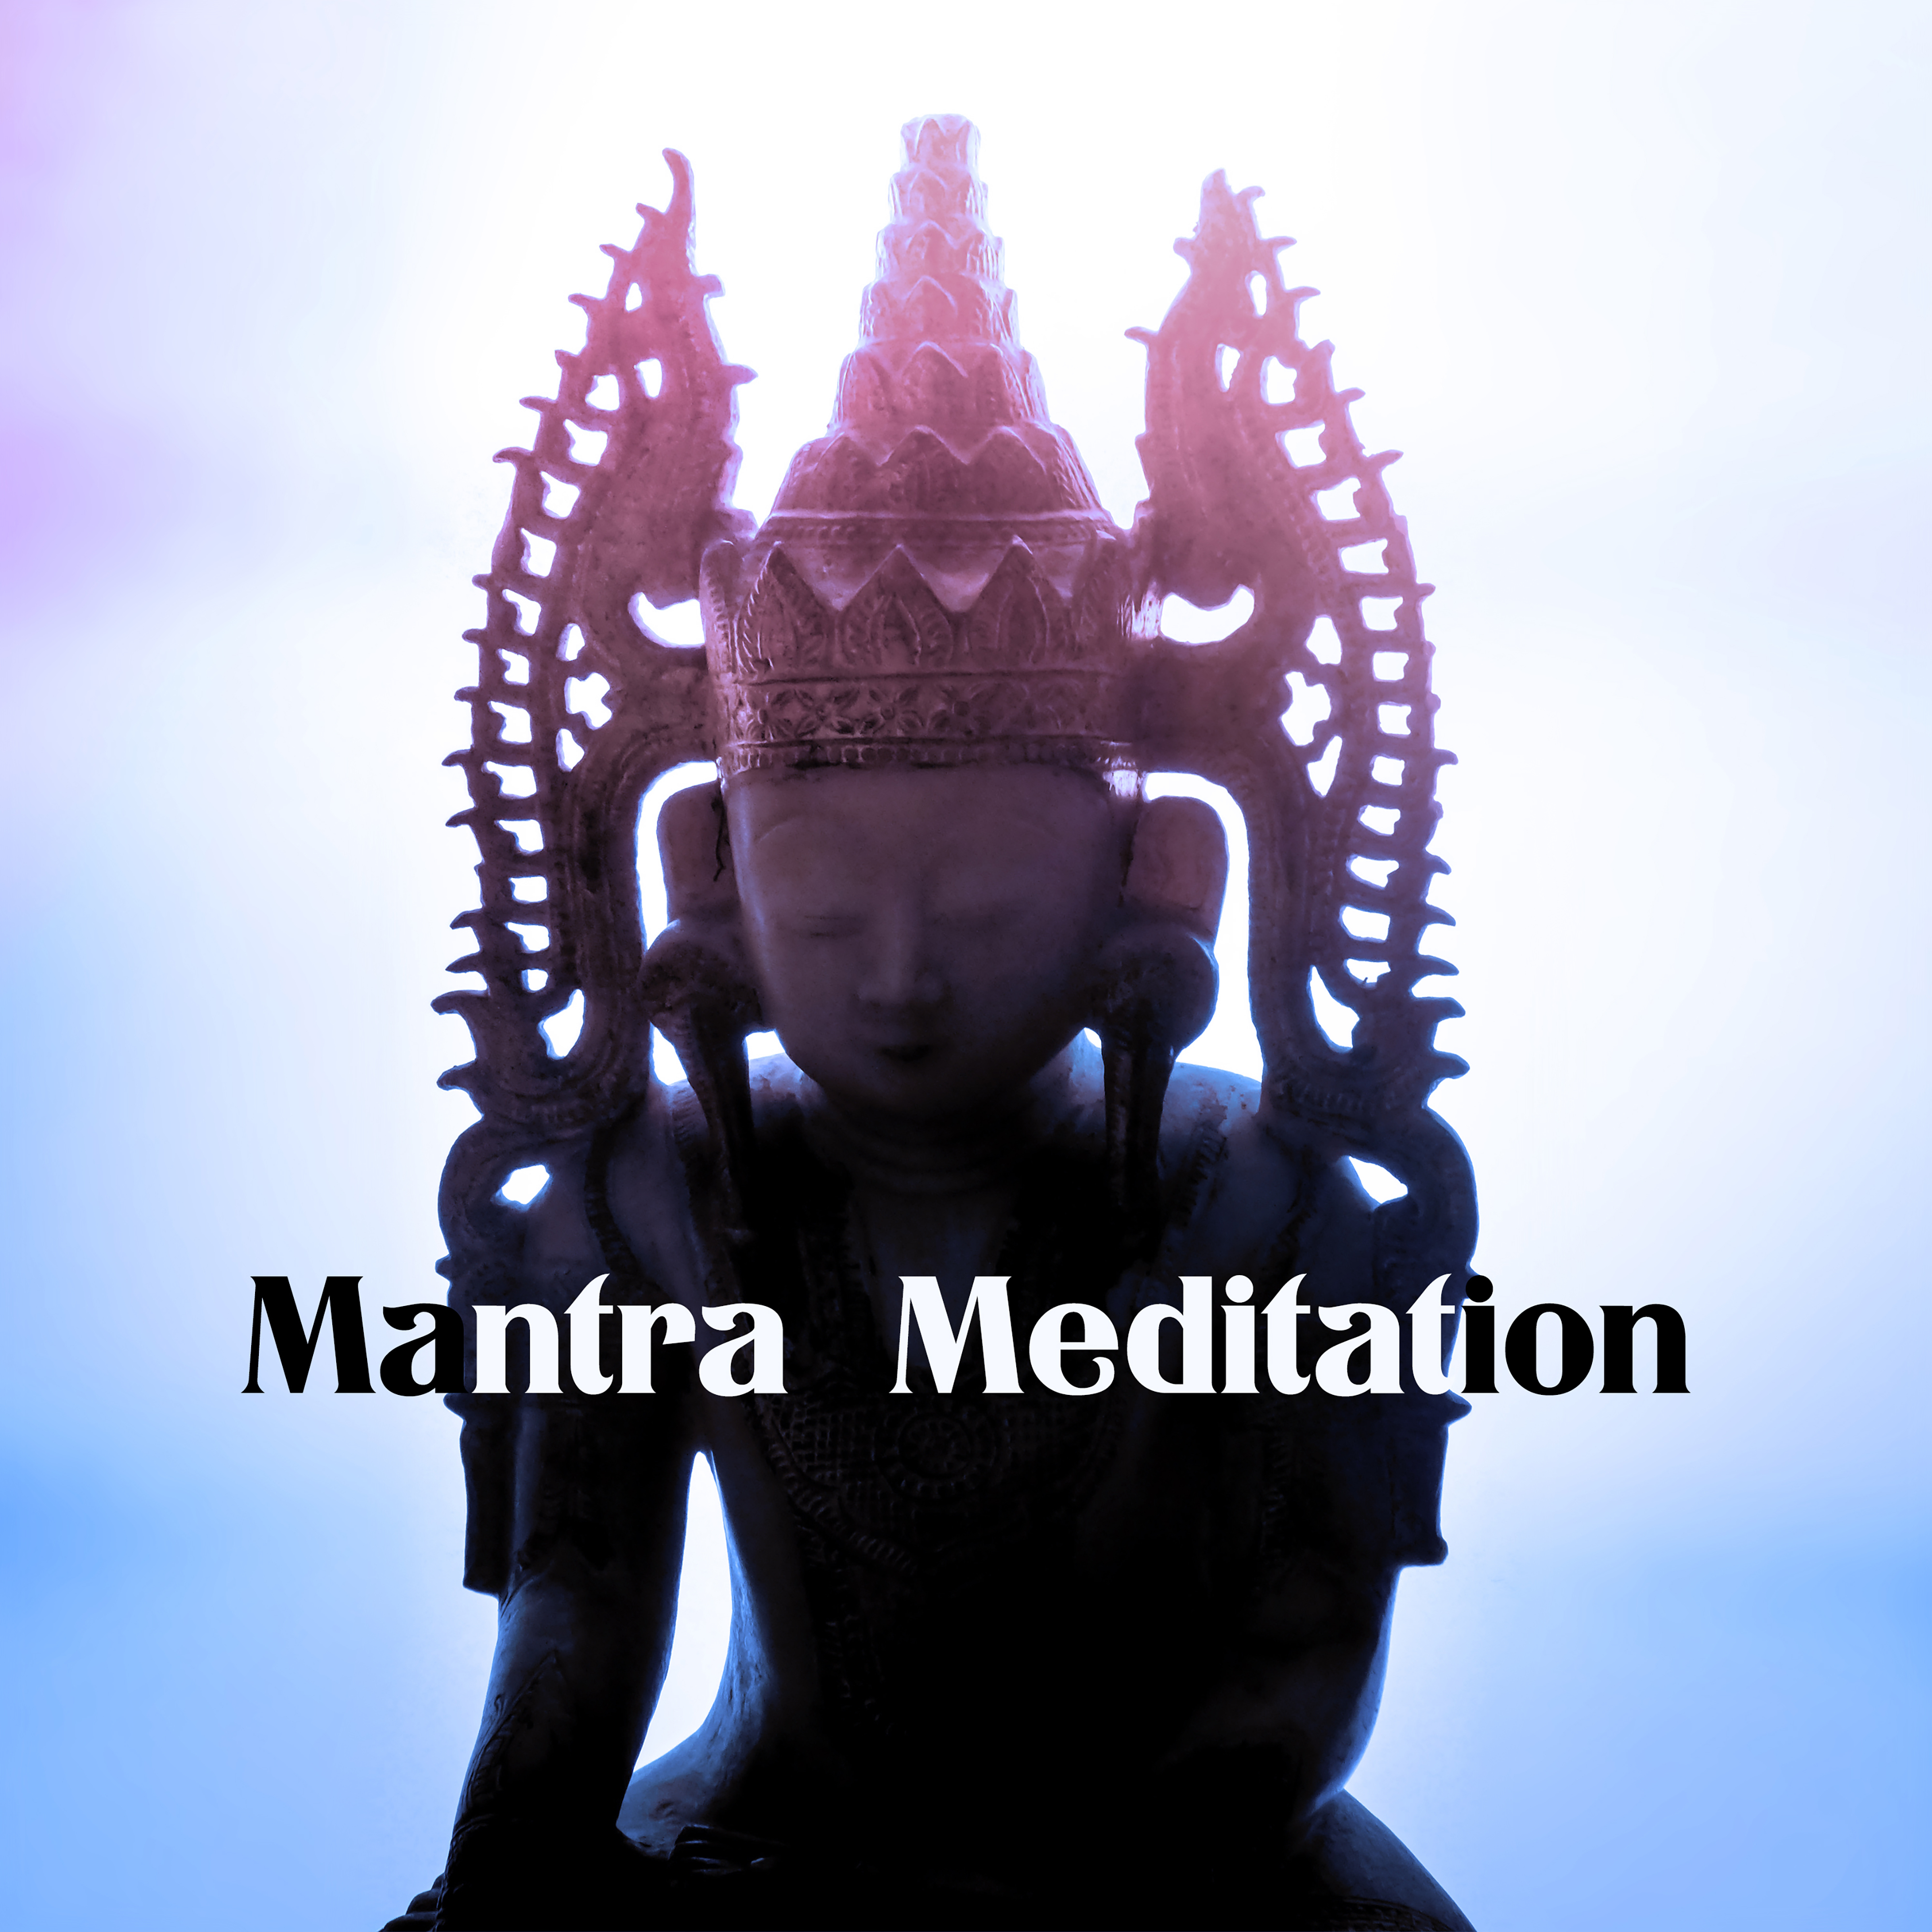 Mantra Meditation – Tibetan Melodies for Mantra, Meditation, Yoga Music, Deep Relaxation